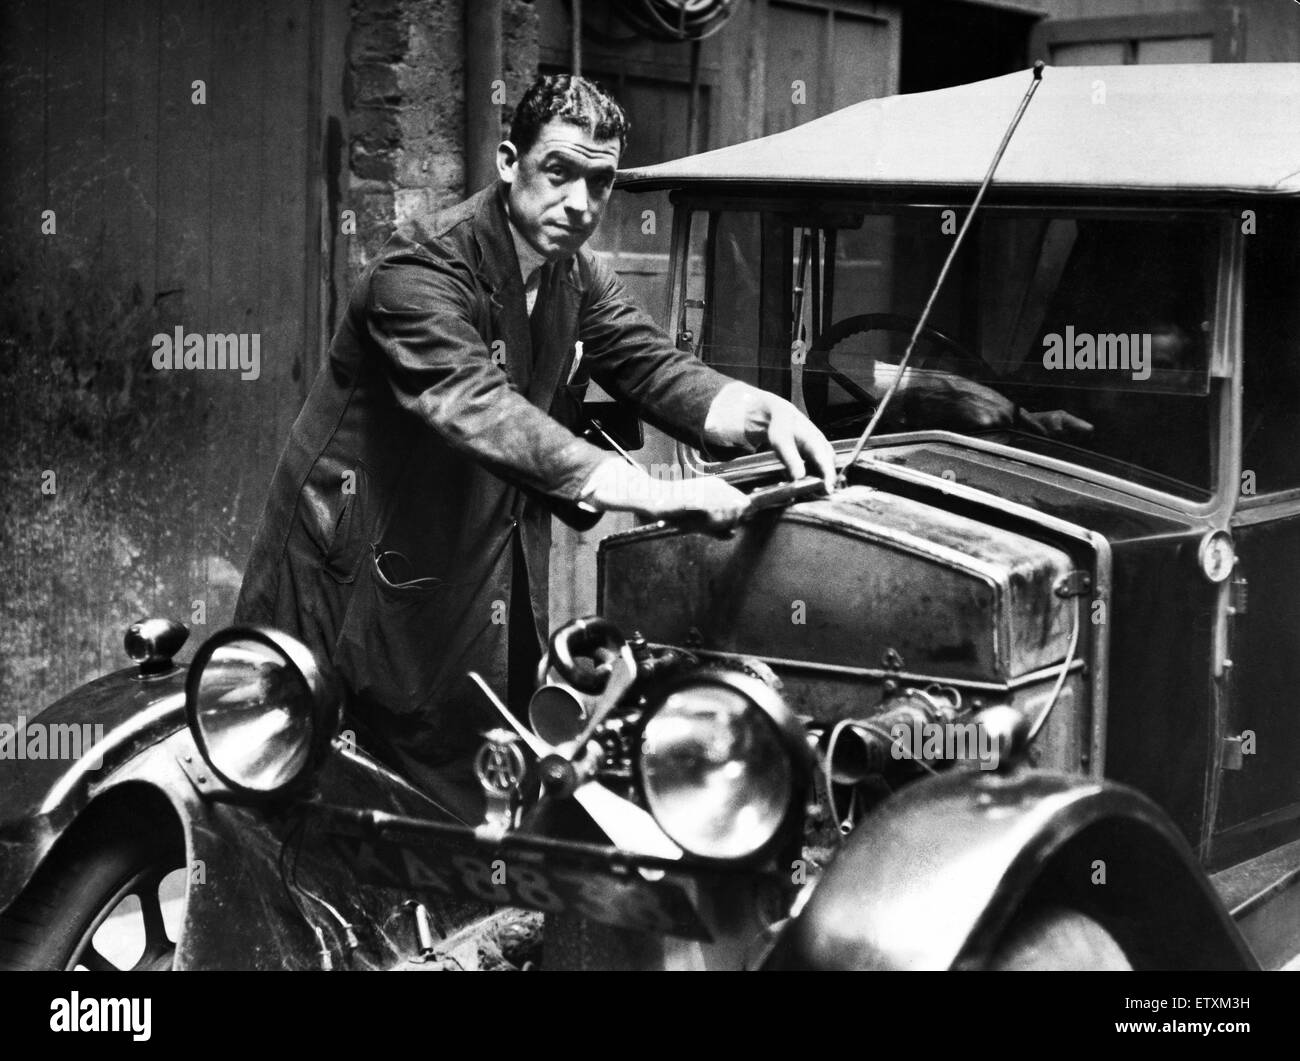 Everton futbolista William 'Dixie' Dean vestido con mono de mecánico como él va a trabajar en un coche. Circa 1936. Foto de stock